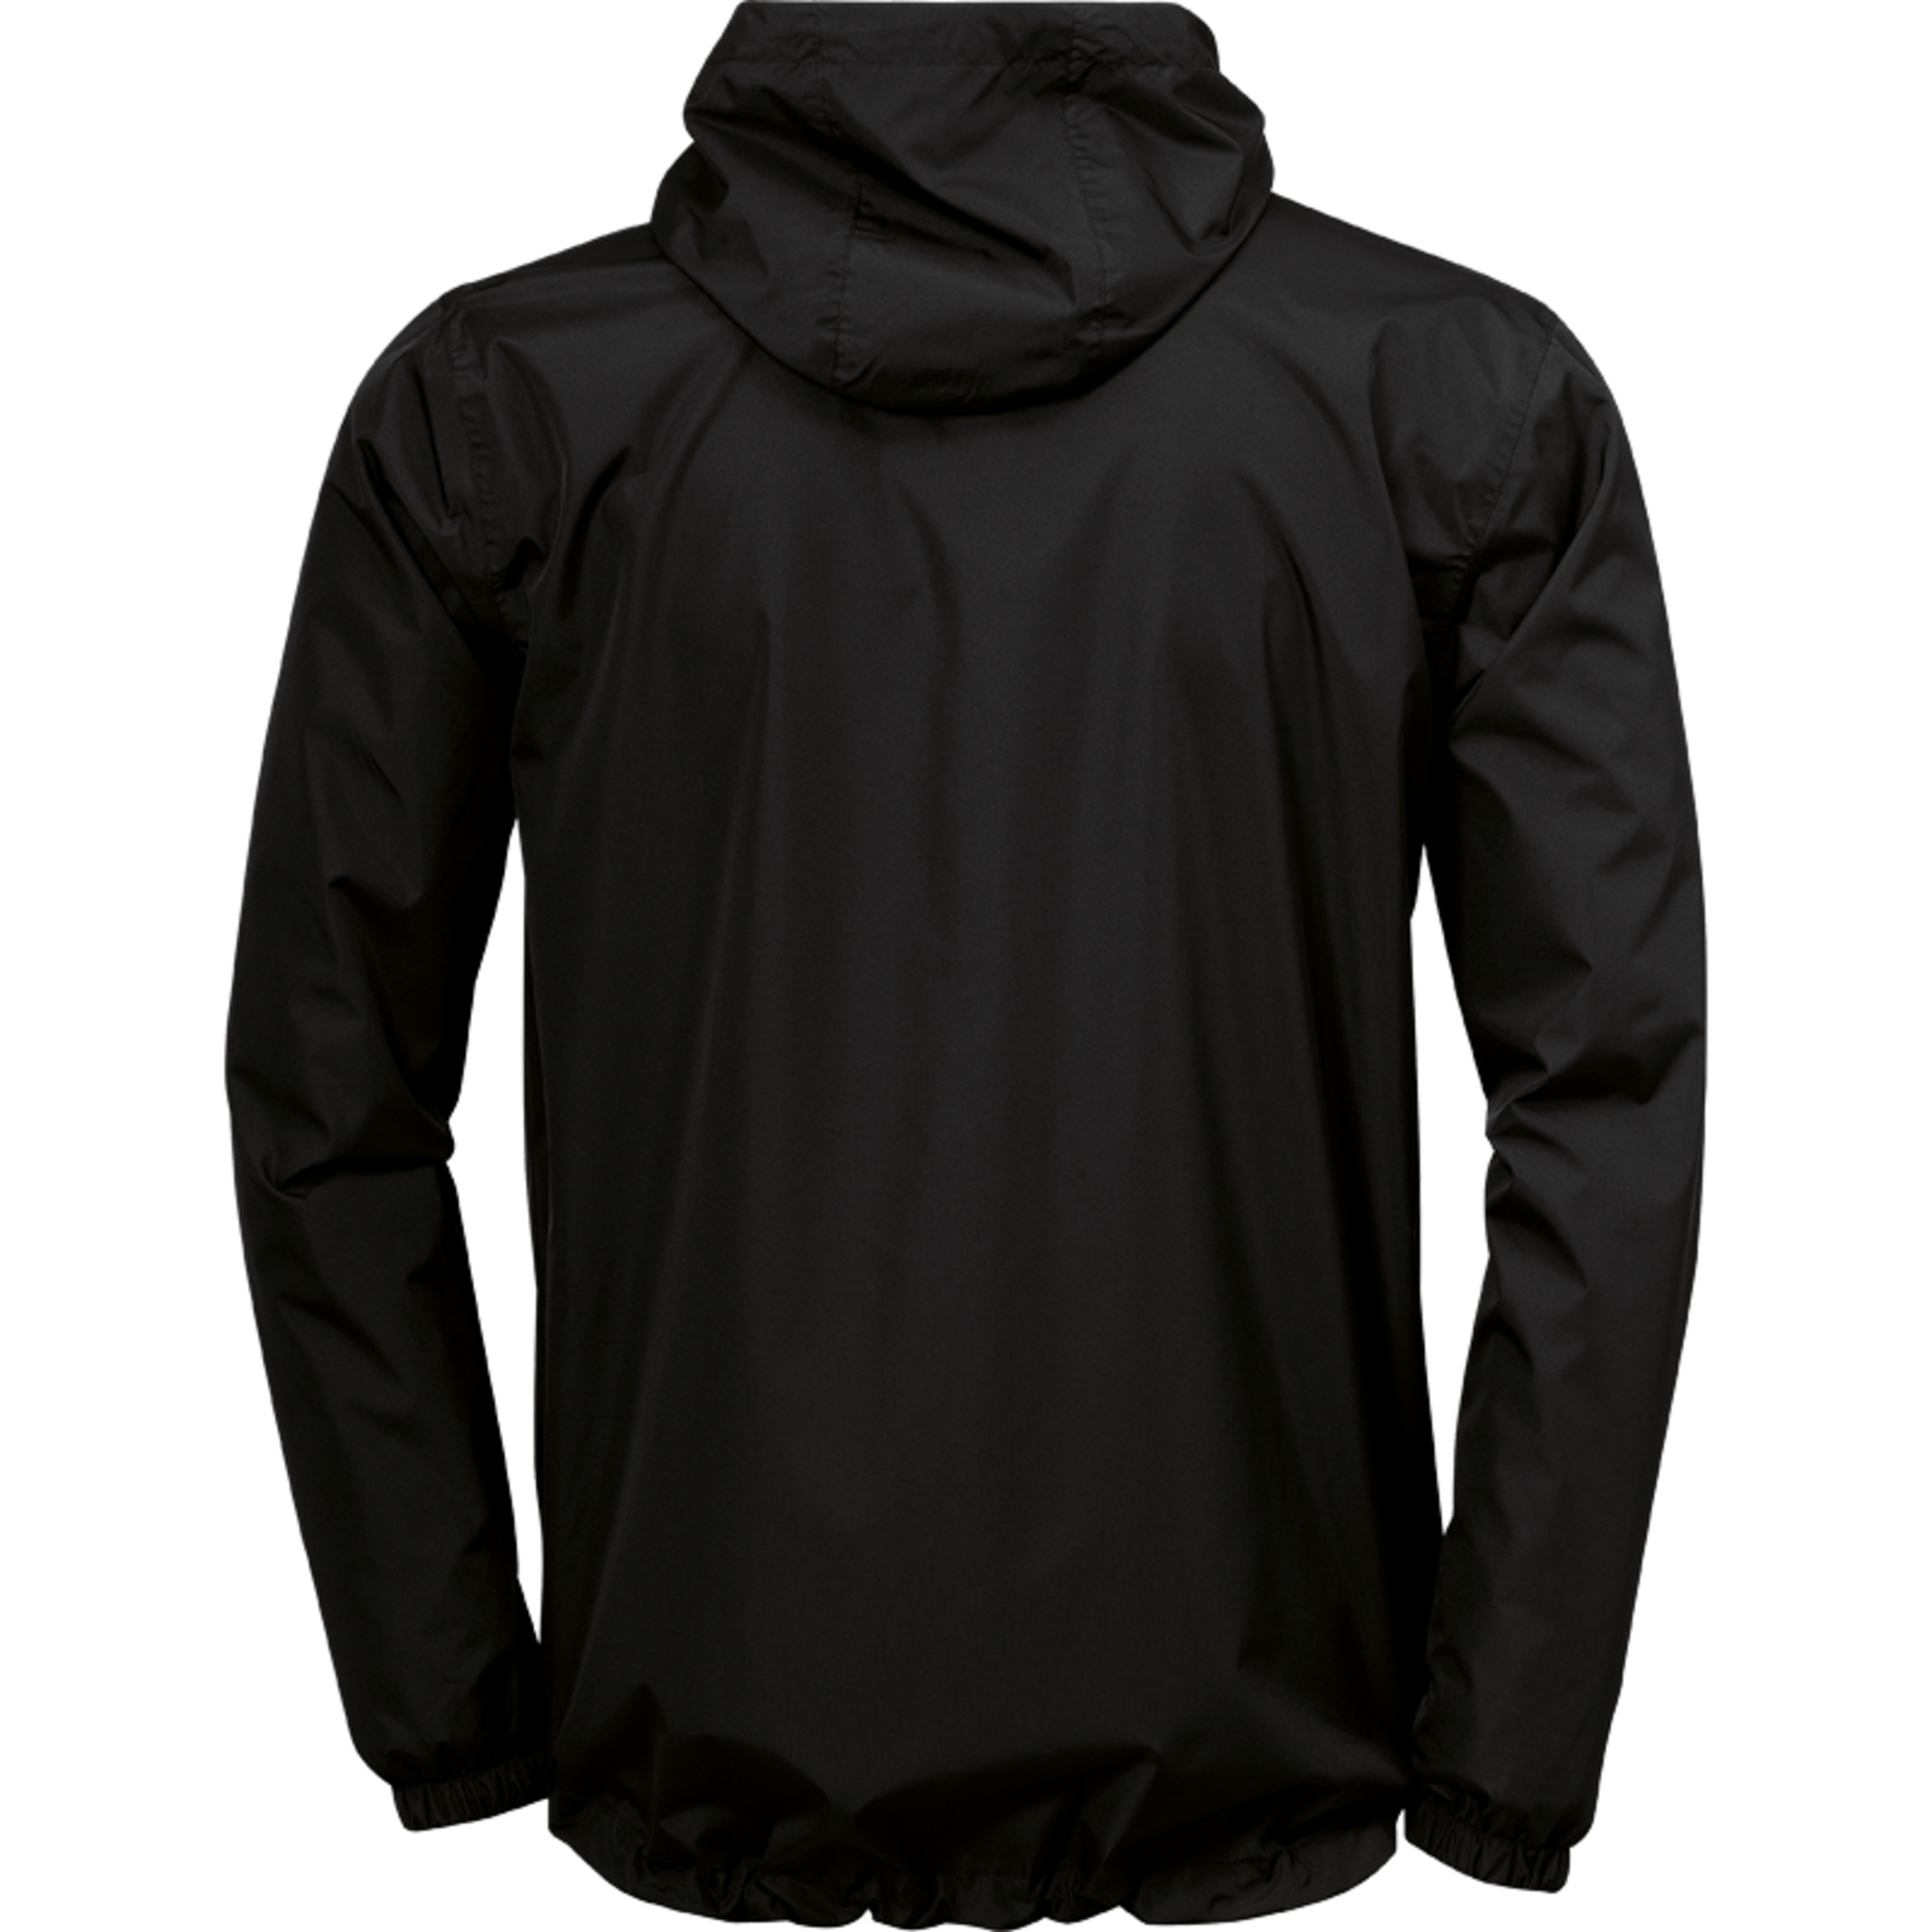 Essential Rain Jacket Negro/blanco Uhlsport - negro_blanco - Essential Rain Jacket Negro/blanco Uhlsport  MKP